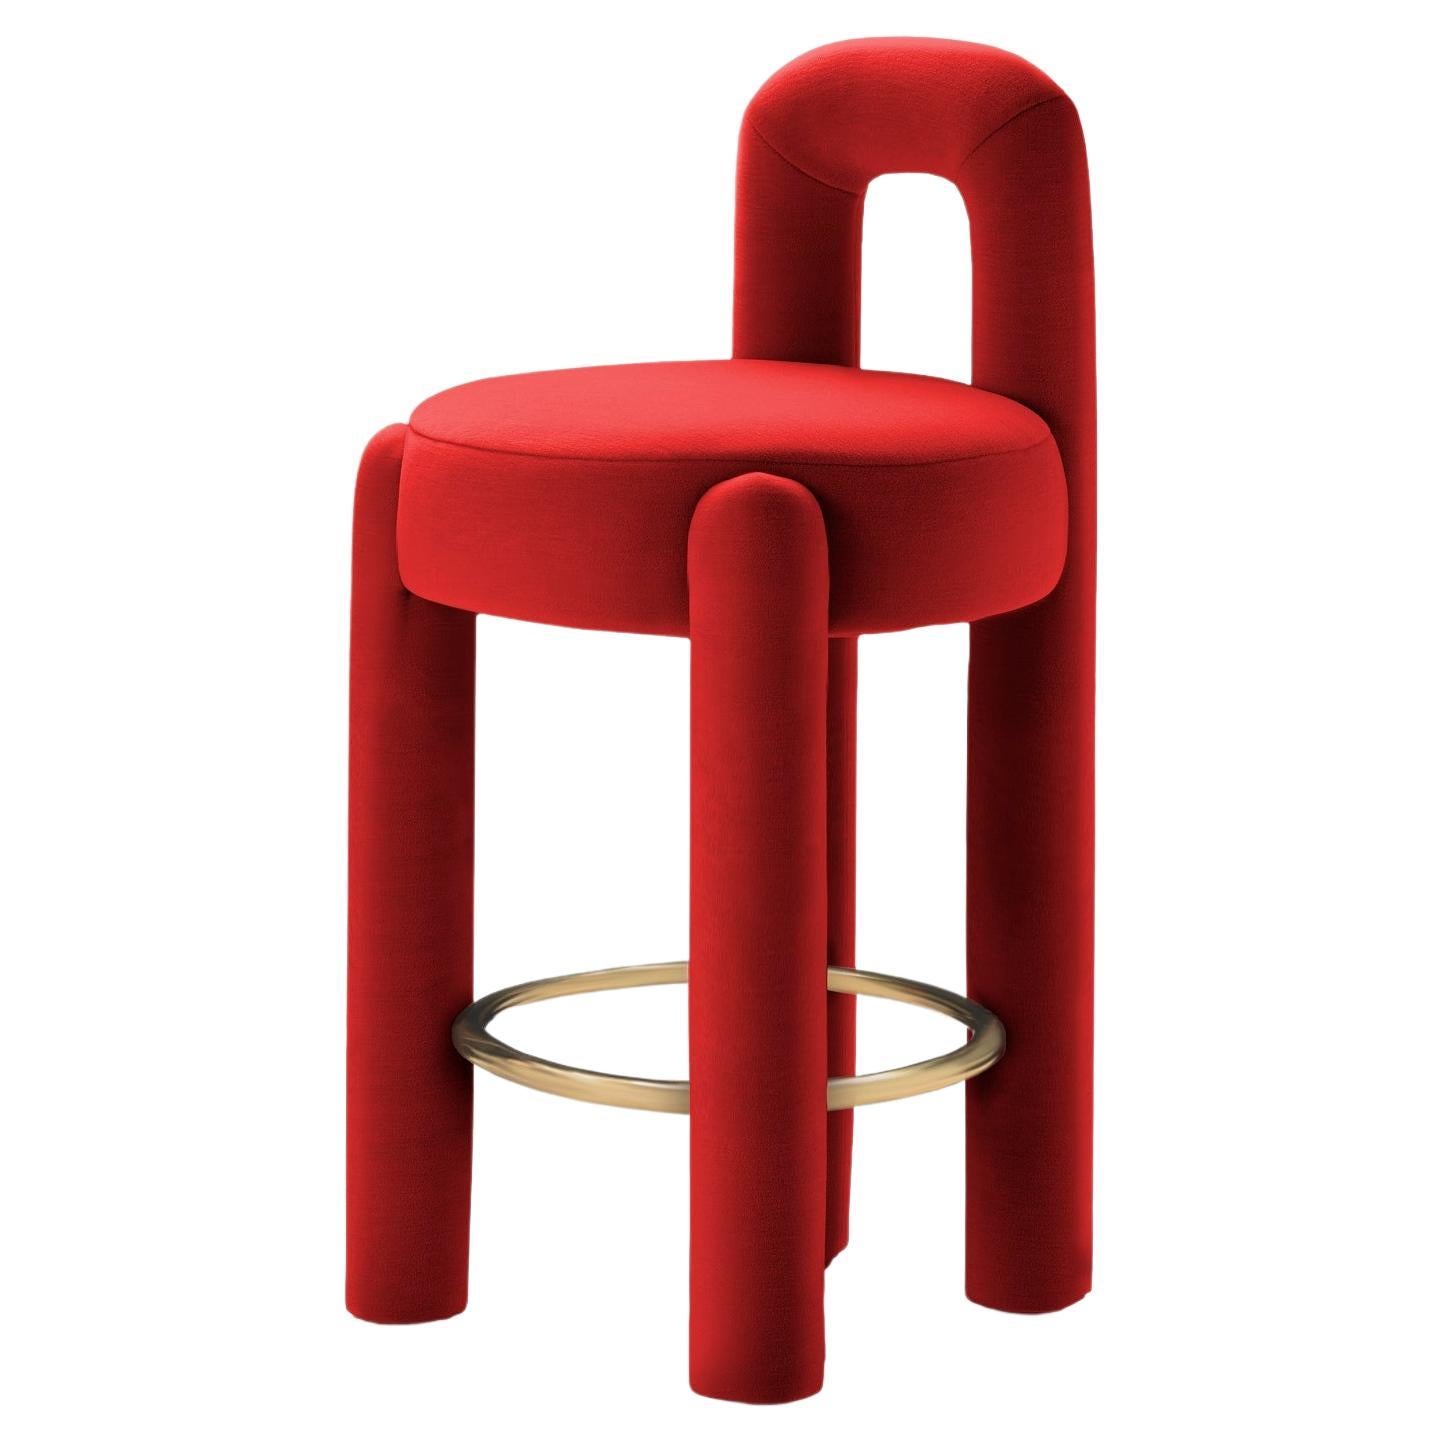 DOOQ! Organic Modern Marlon Bar Chair in Red Kvadrat by P. Franceschini For Sale